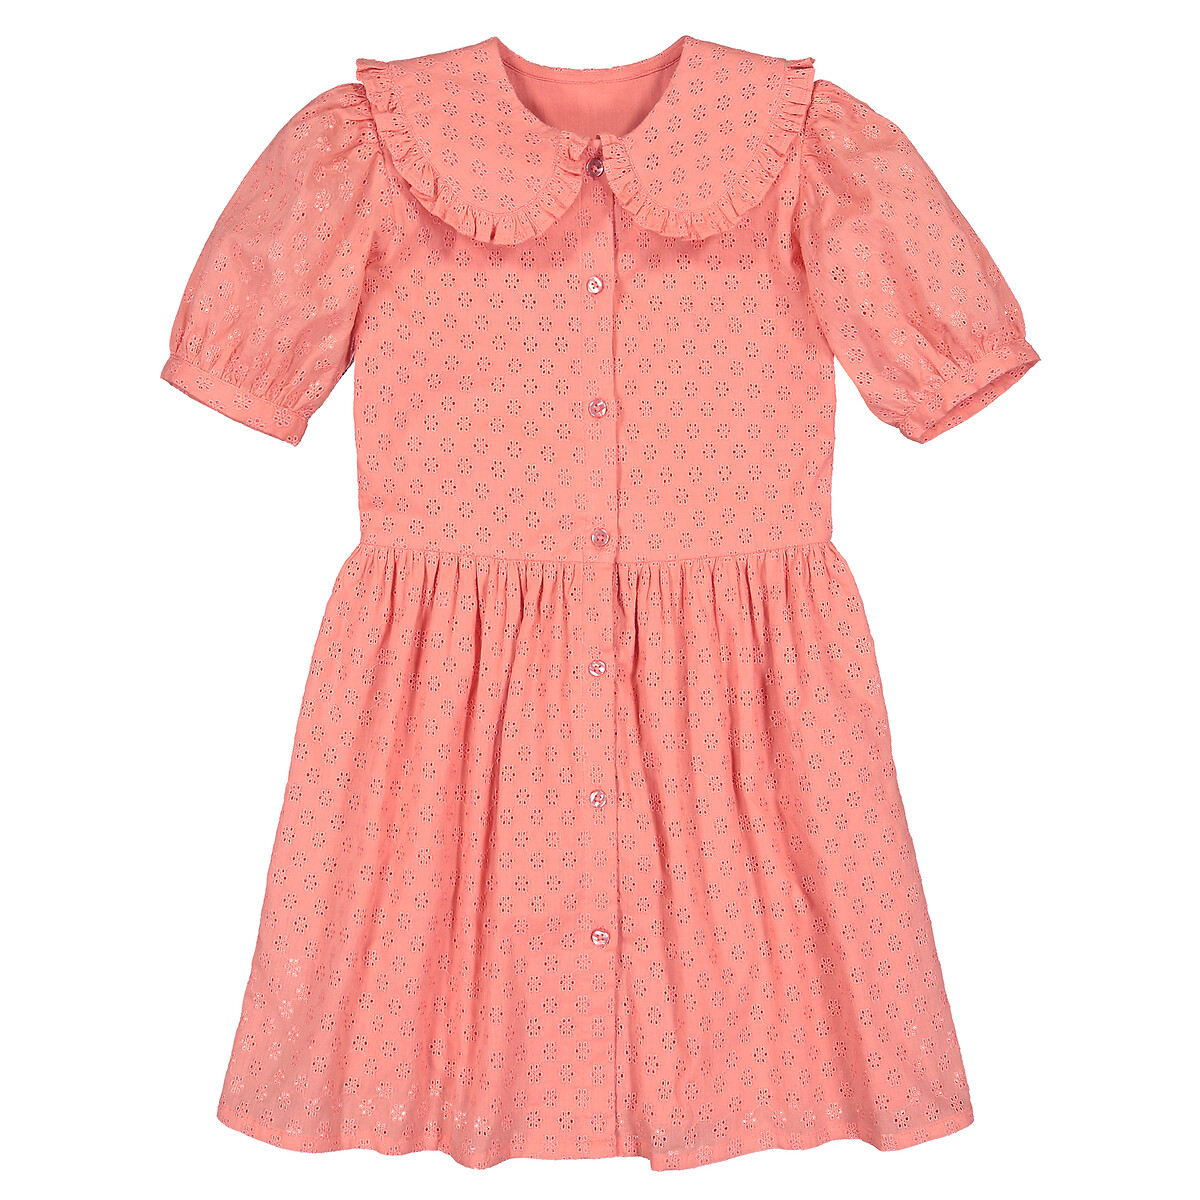 New La Redoute abcd R Powder Pink Cotton Swishy Dress Gold detail Age 4 yrs 